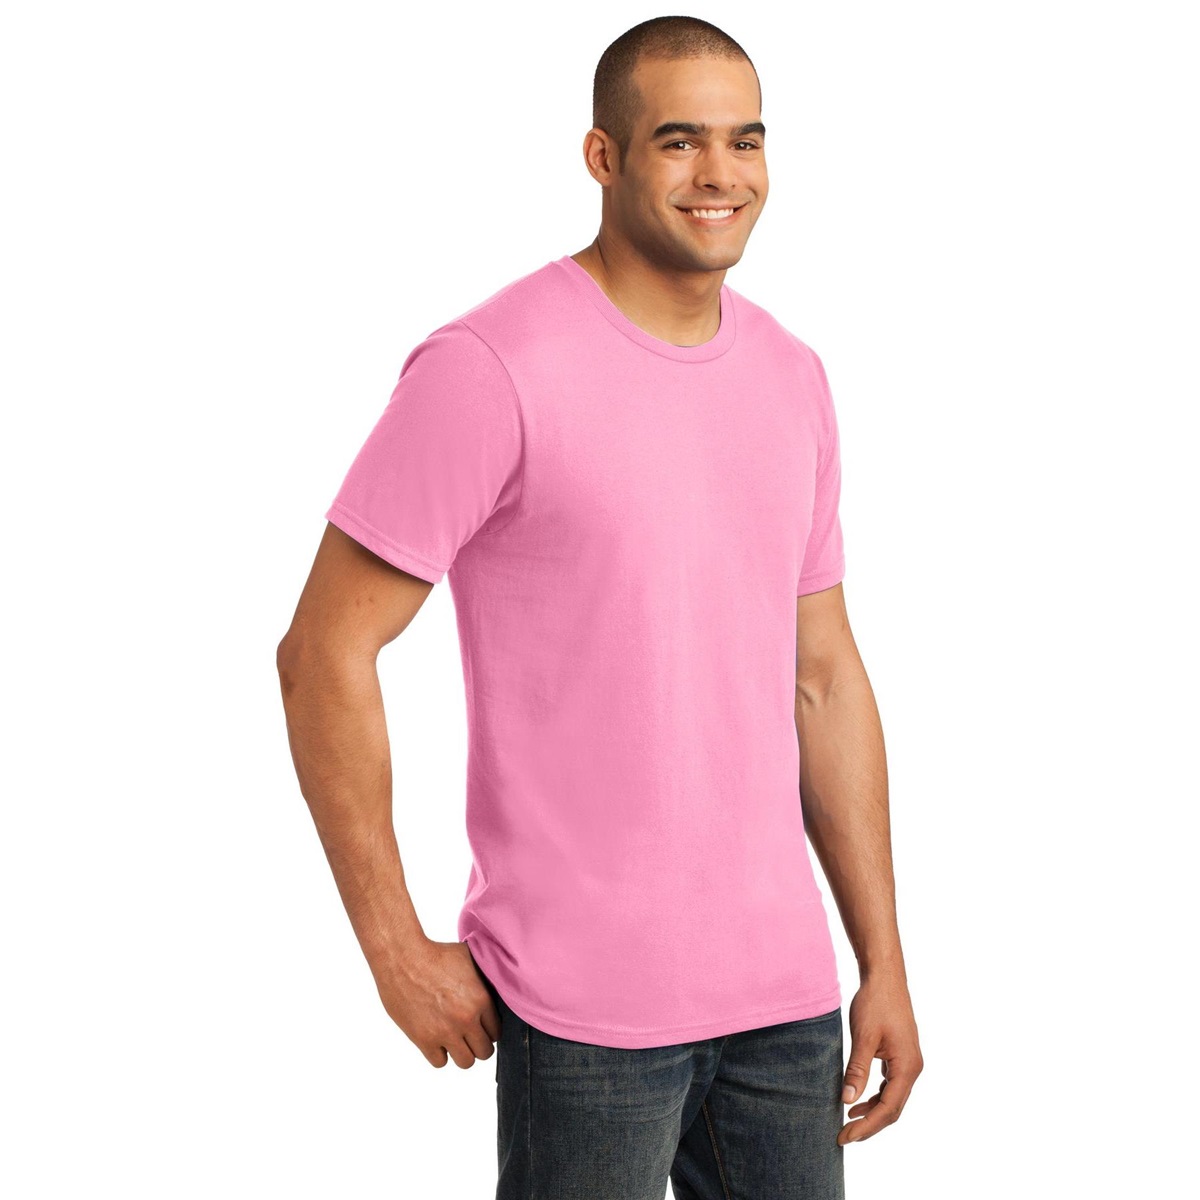 Anvil 980 100% Ring Spun Cotton T-Shirt - Charity Pink | FullSource.com